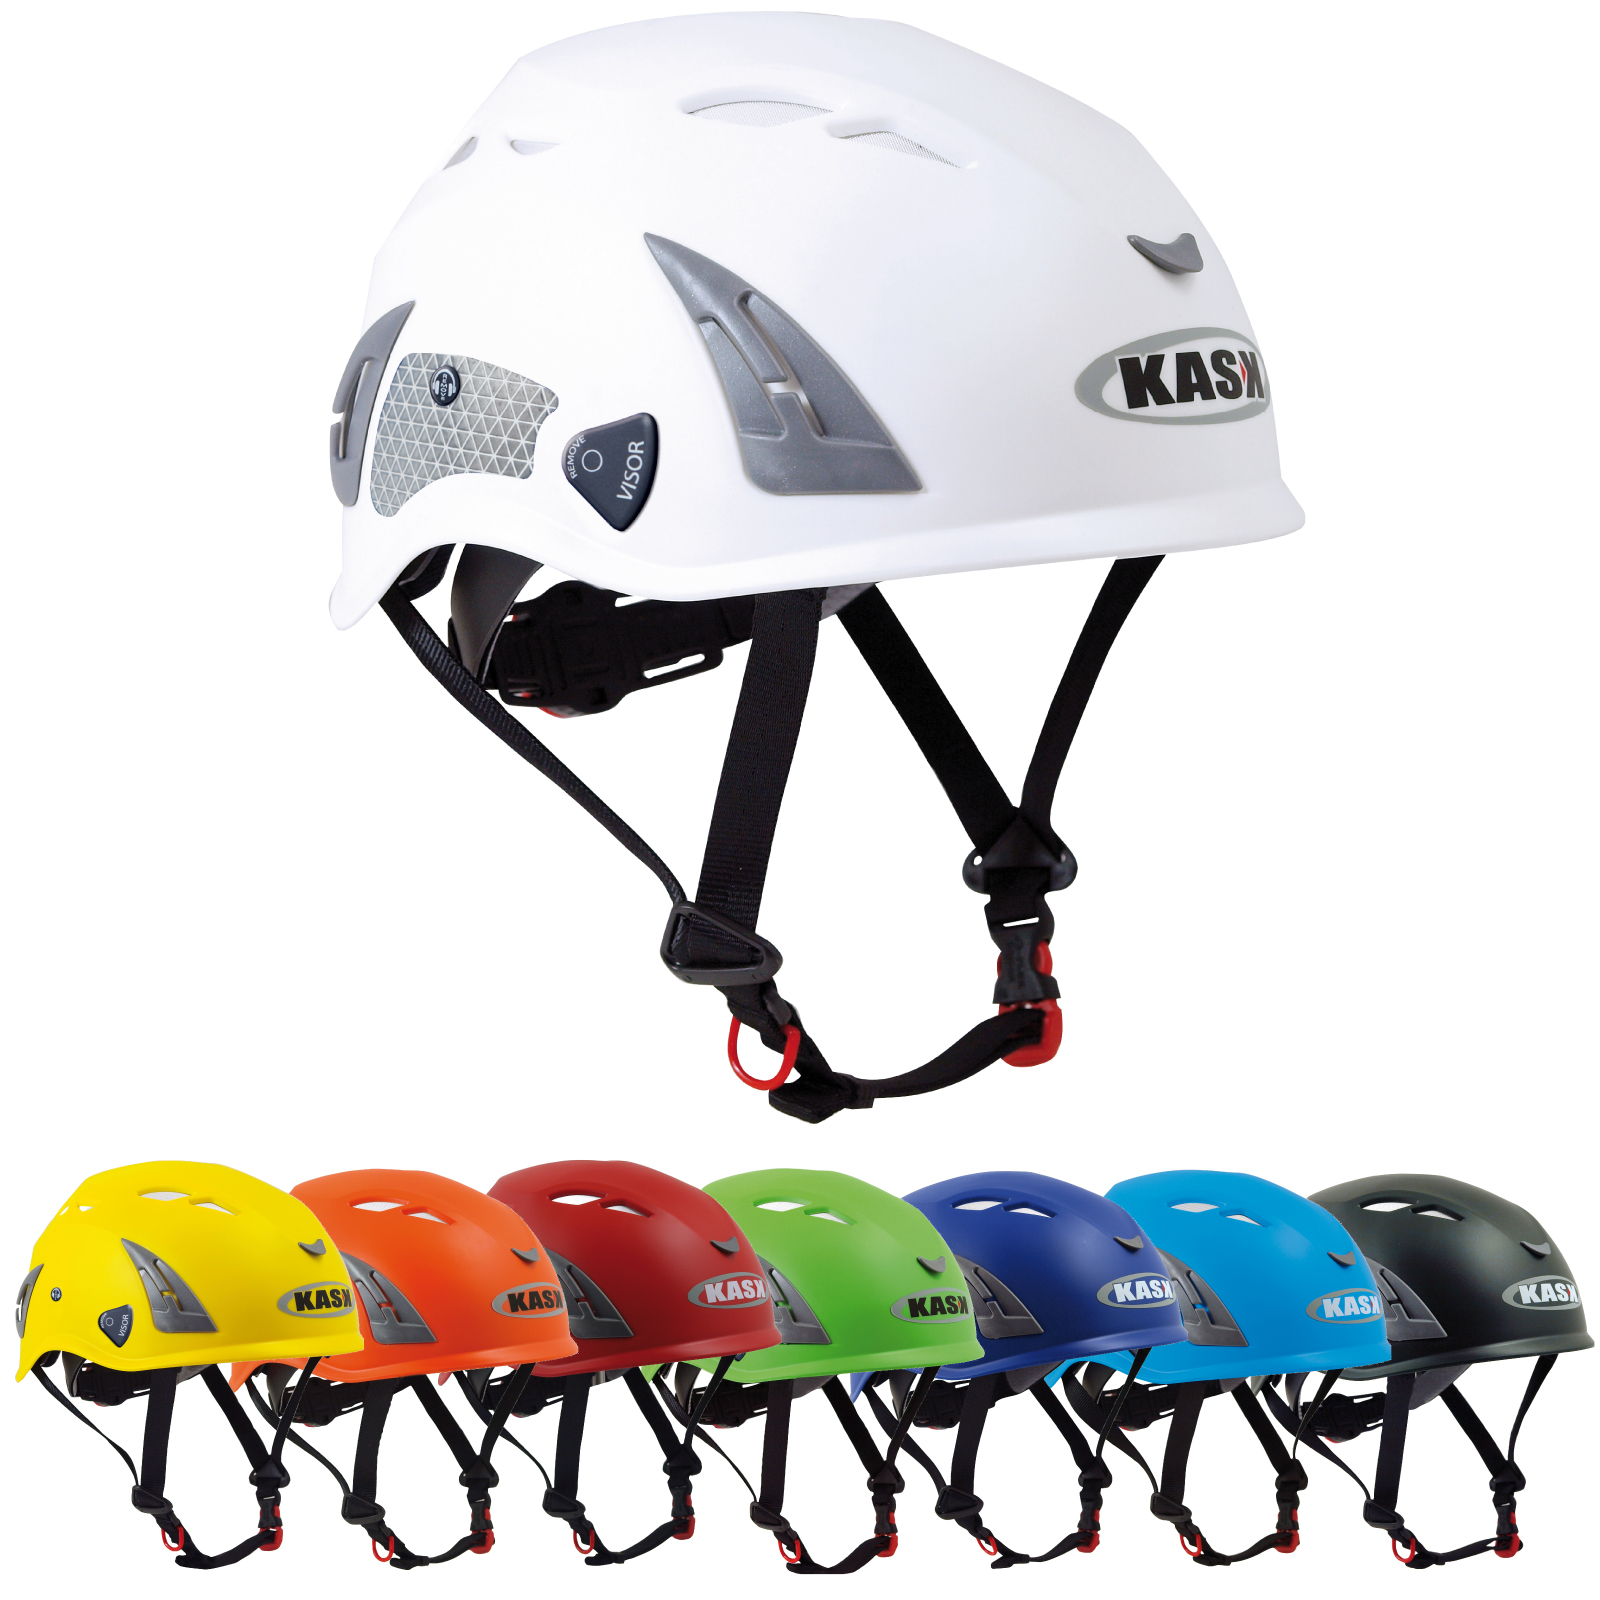 Verschiedene Farben des ABS Comfort Helms